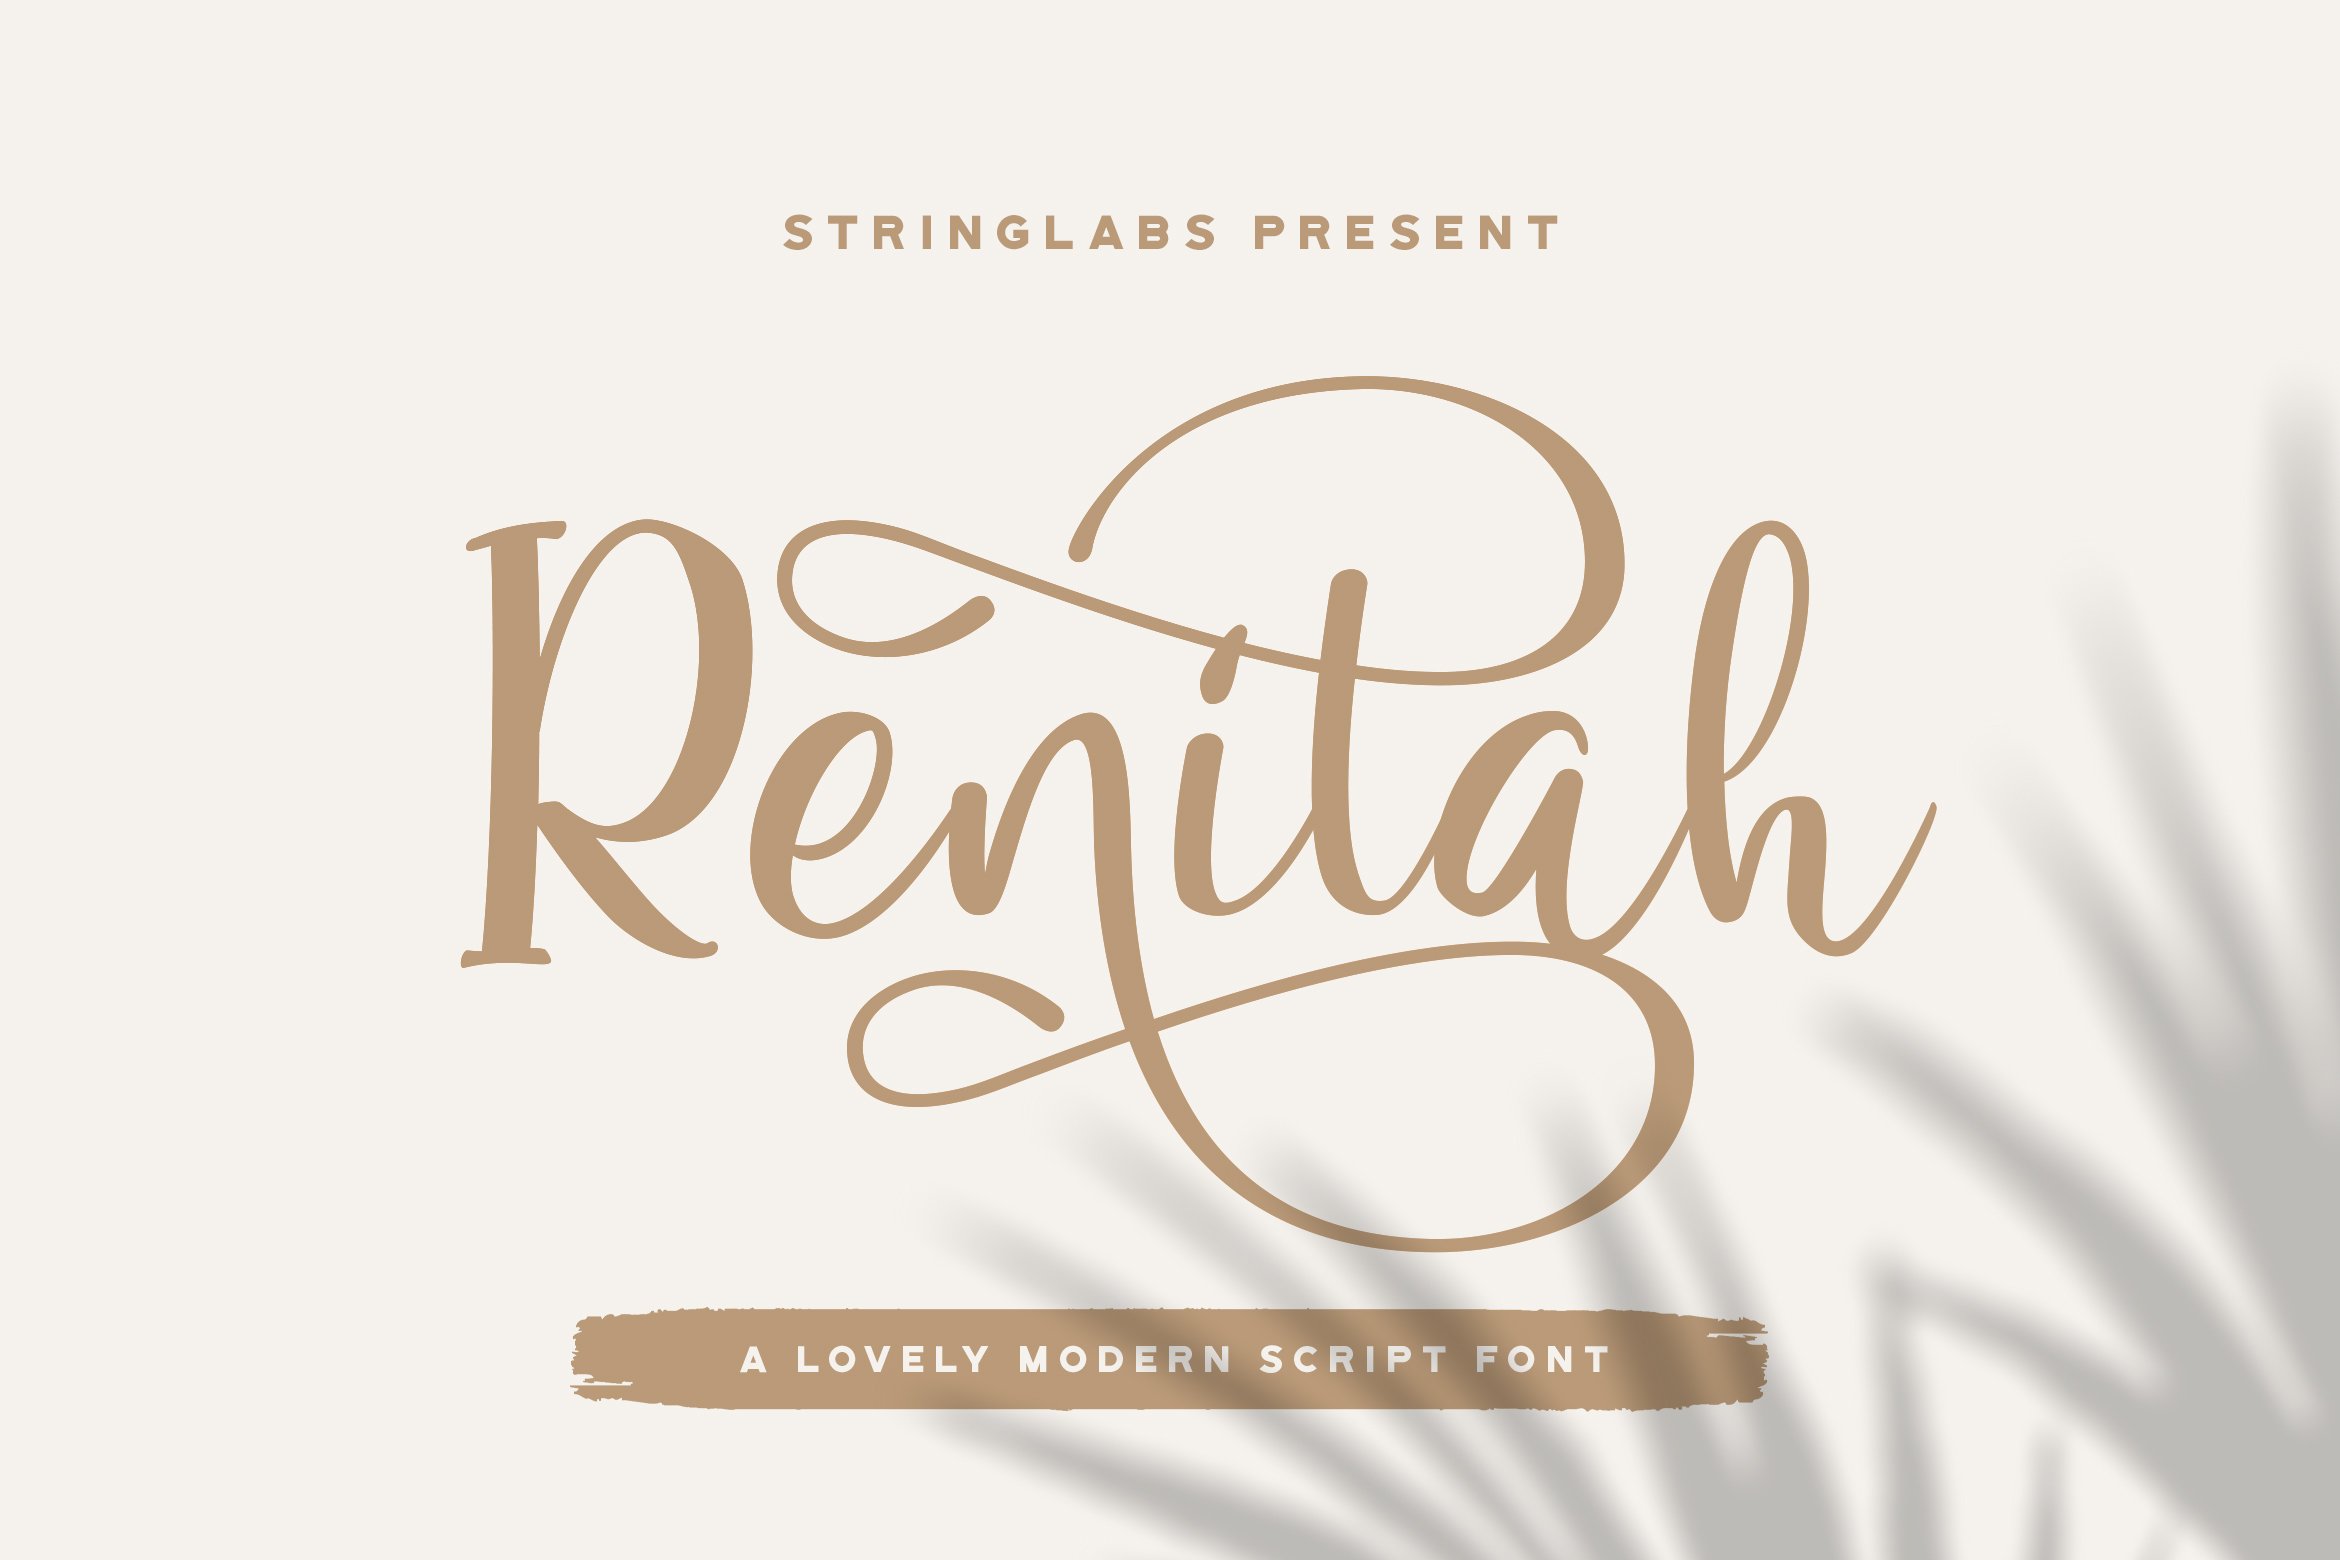 Renitah - Lovely Script Font cover image.